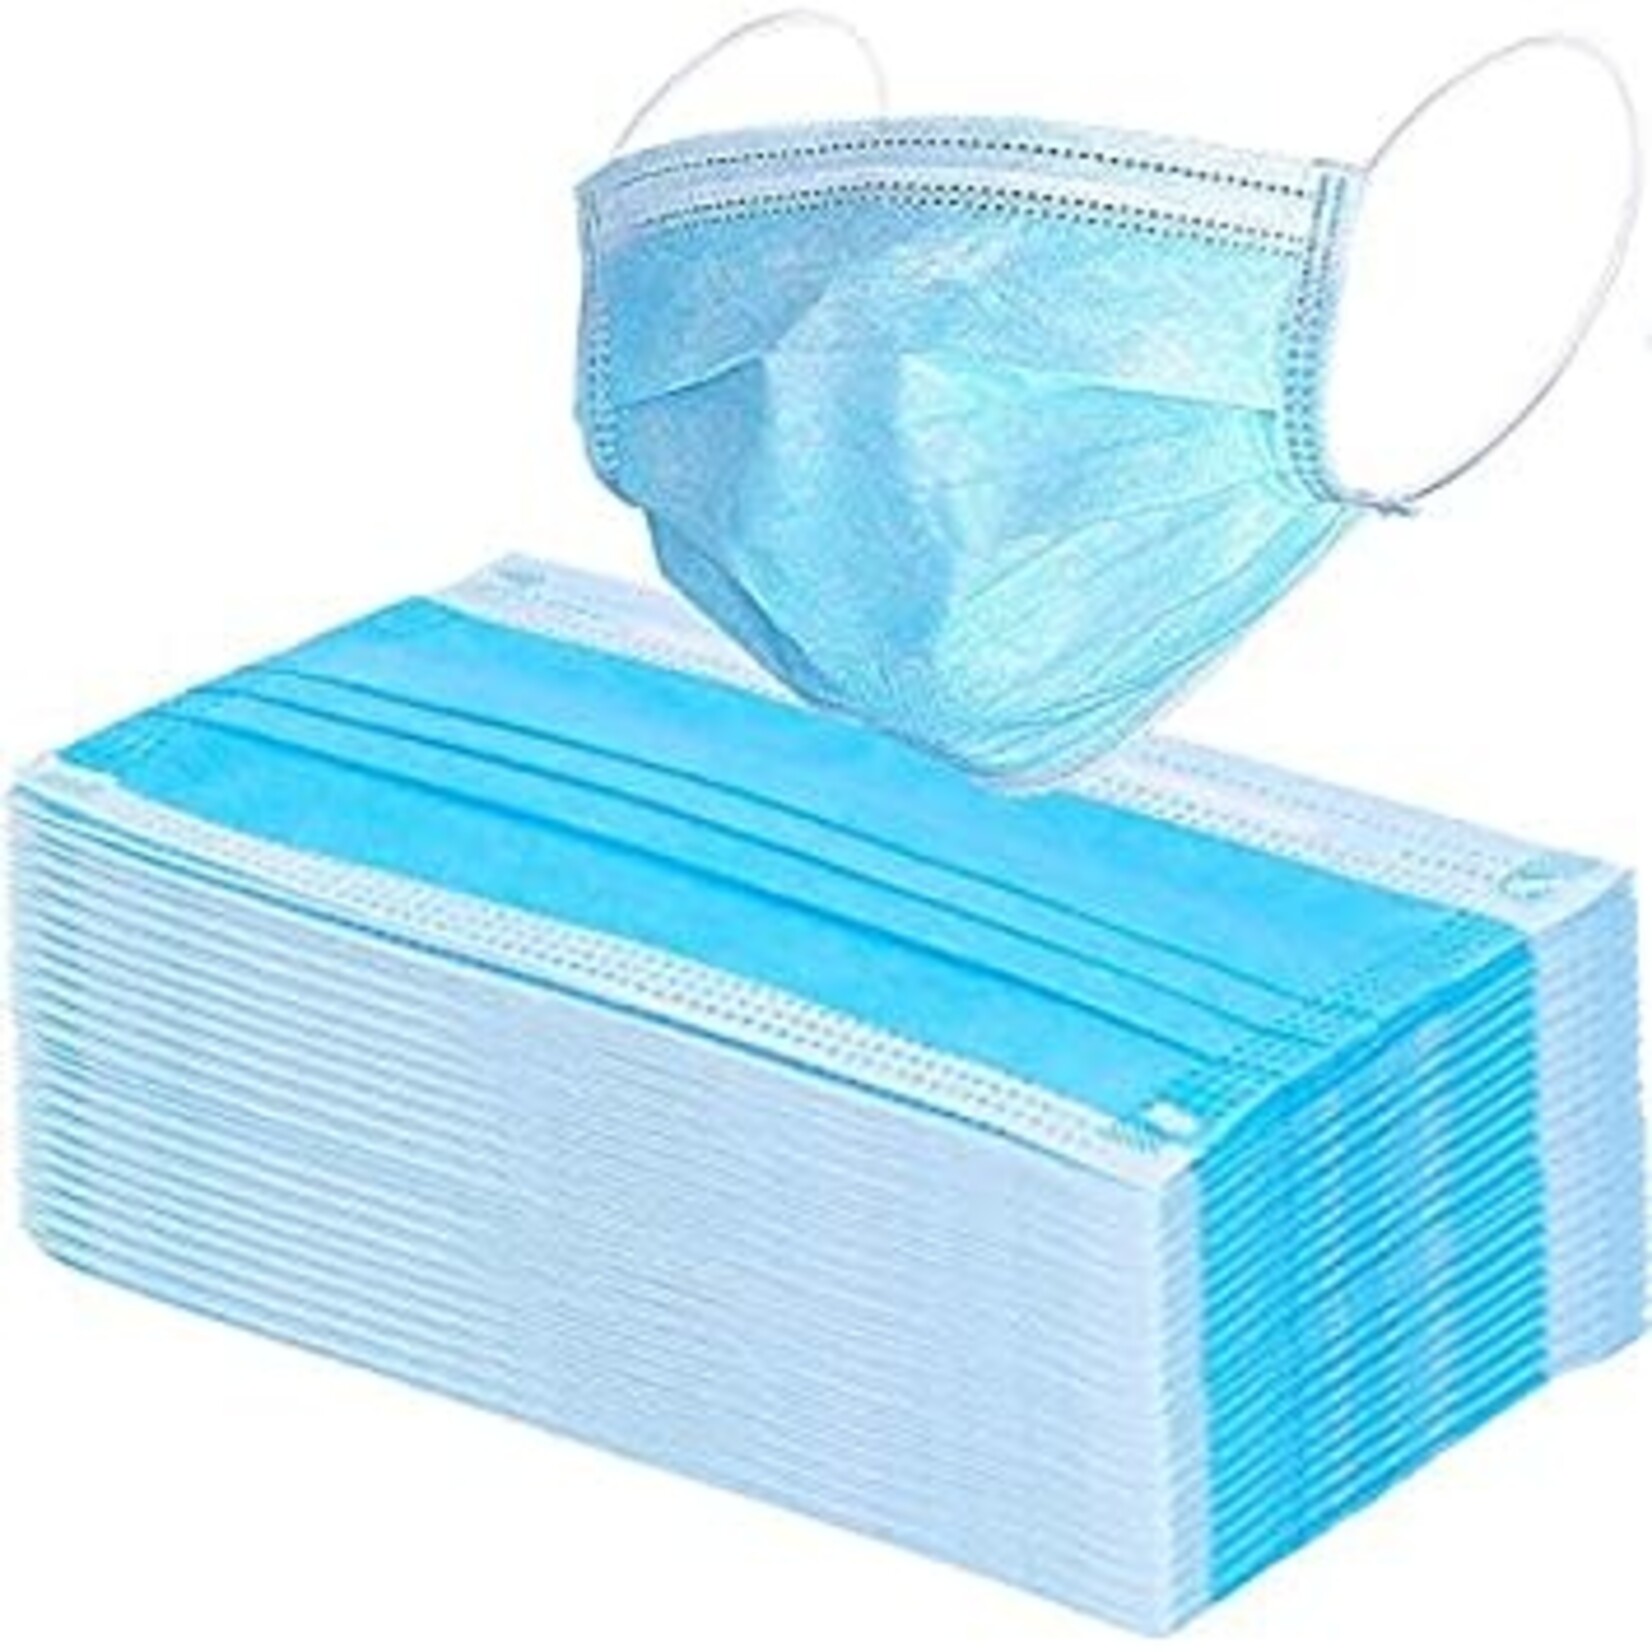 Disposable Protective Face Mask Box (50 Pieces)